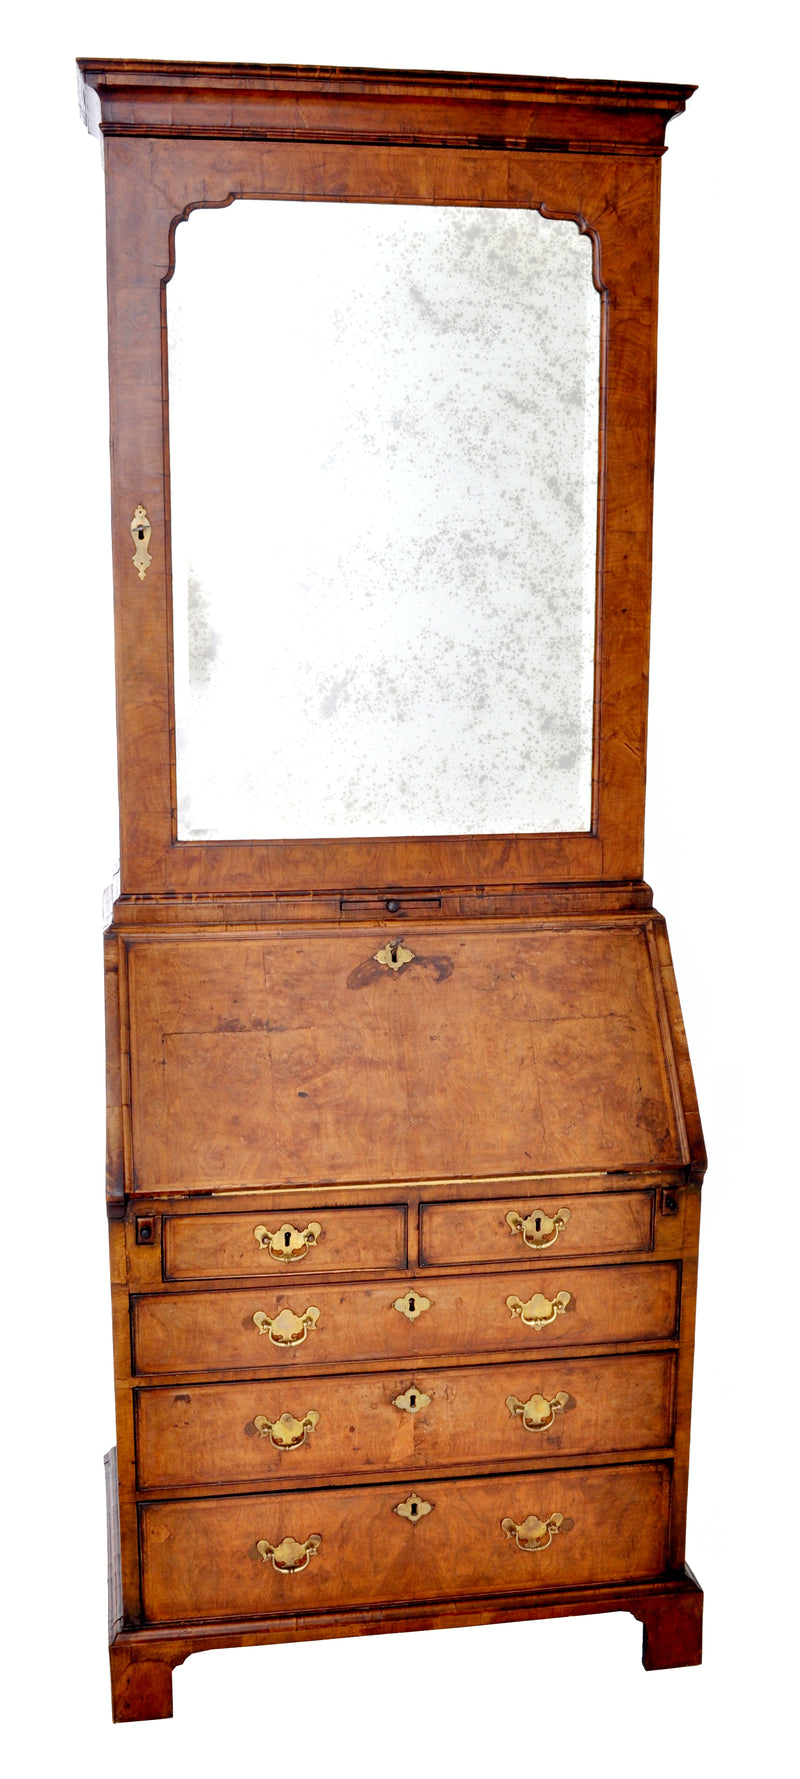 Antique Queen Anne Burl Walnut Bookcase / Bureau / Secretary Desk, Circa 1710